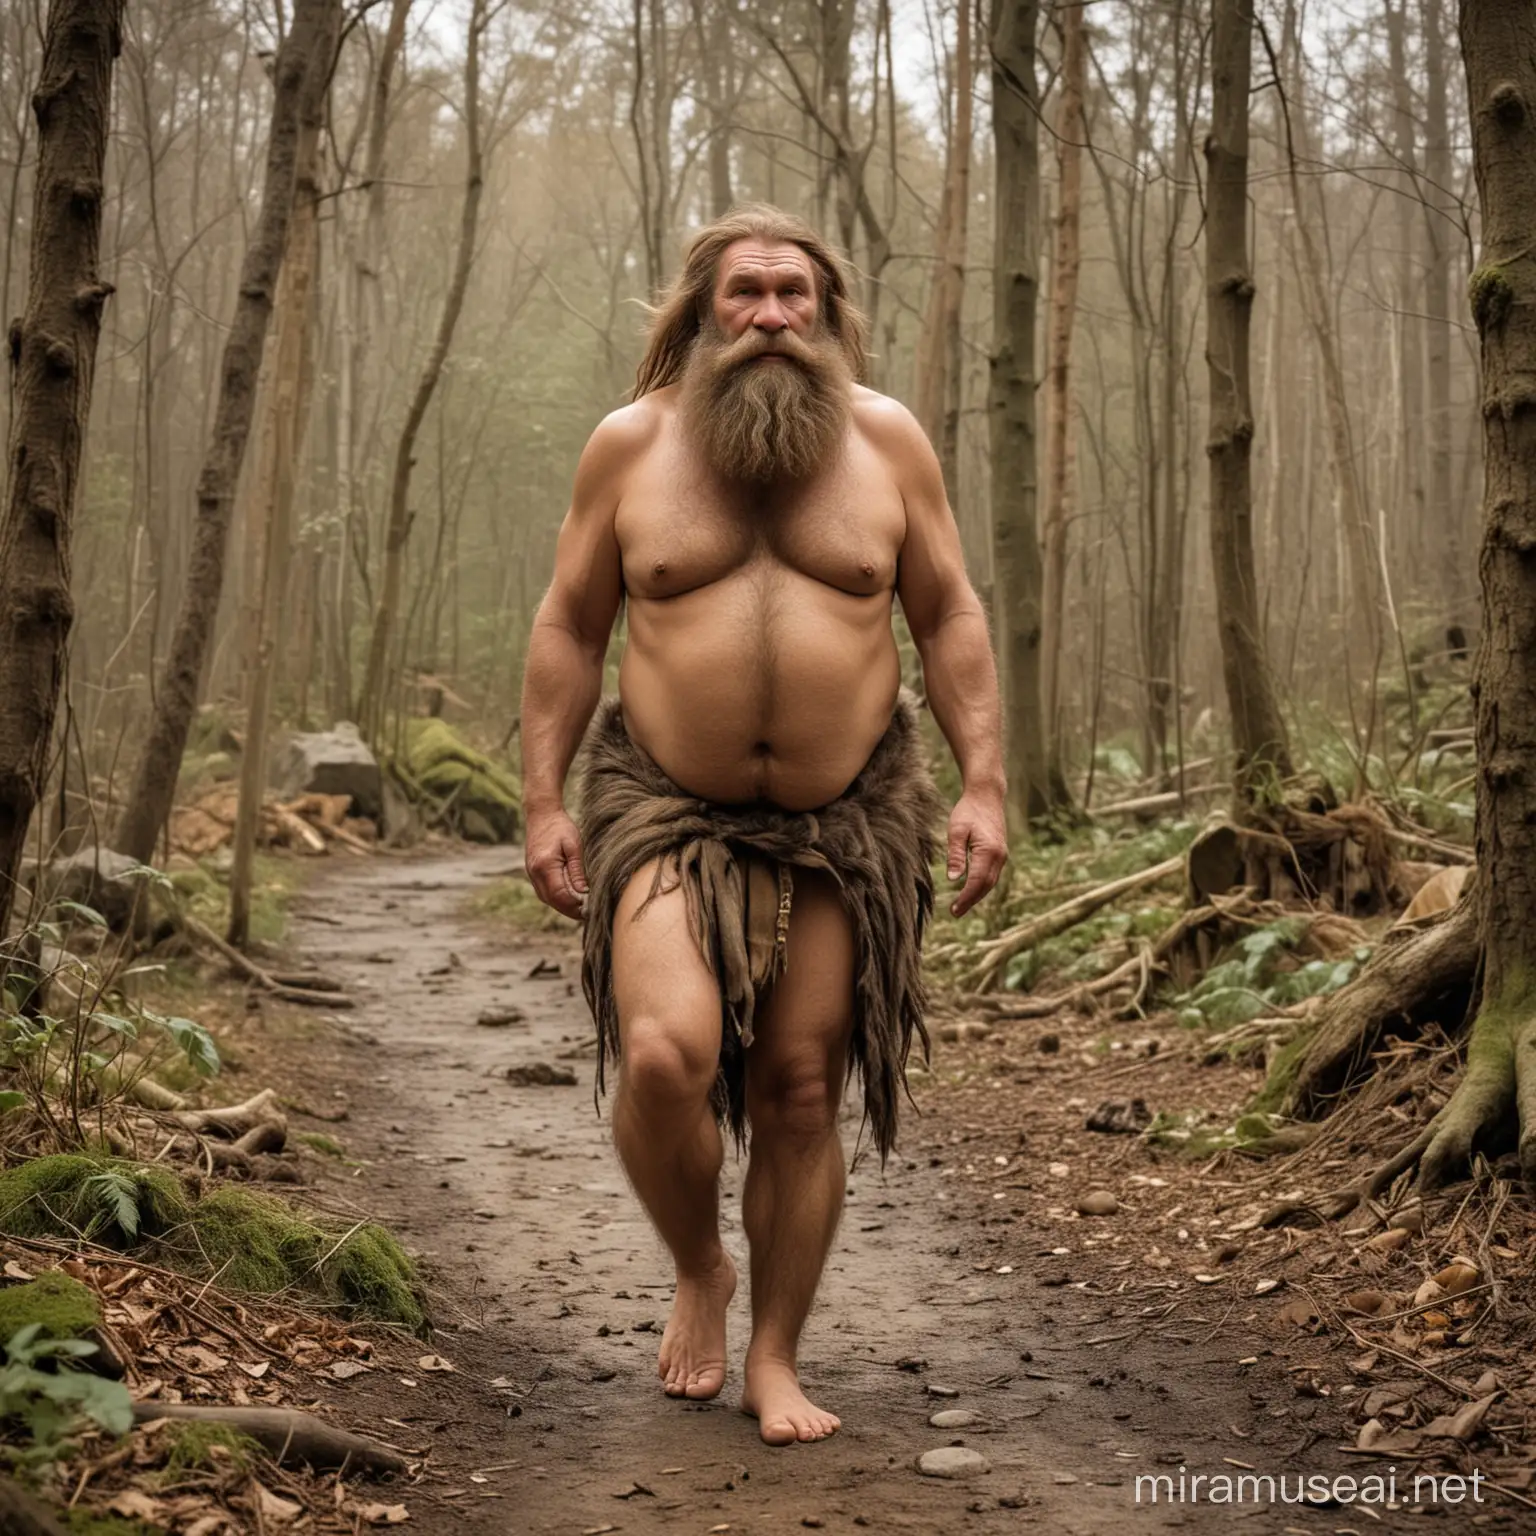 Primitive Neanderthal Hiking Through Dense Forest in Fur Loincloth